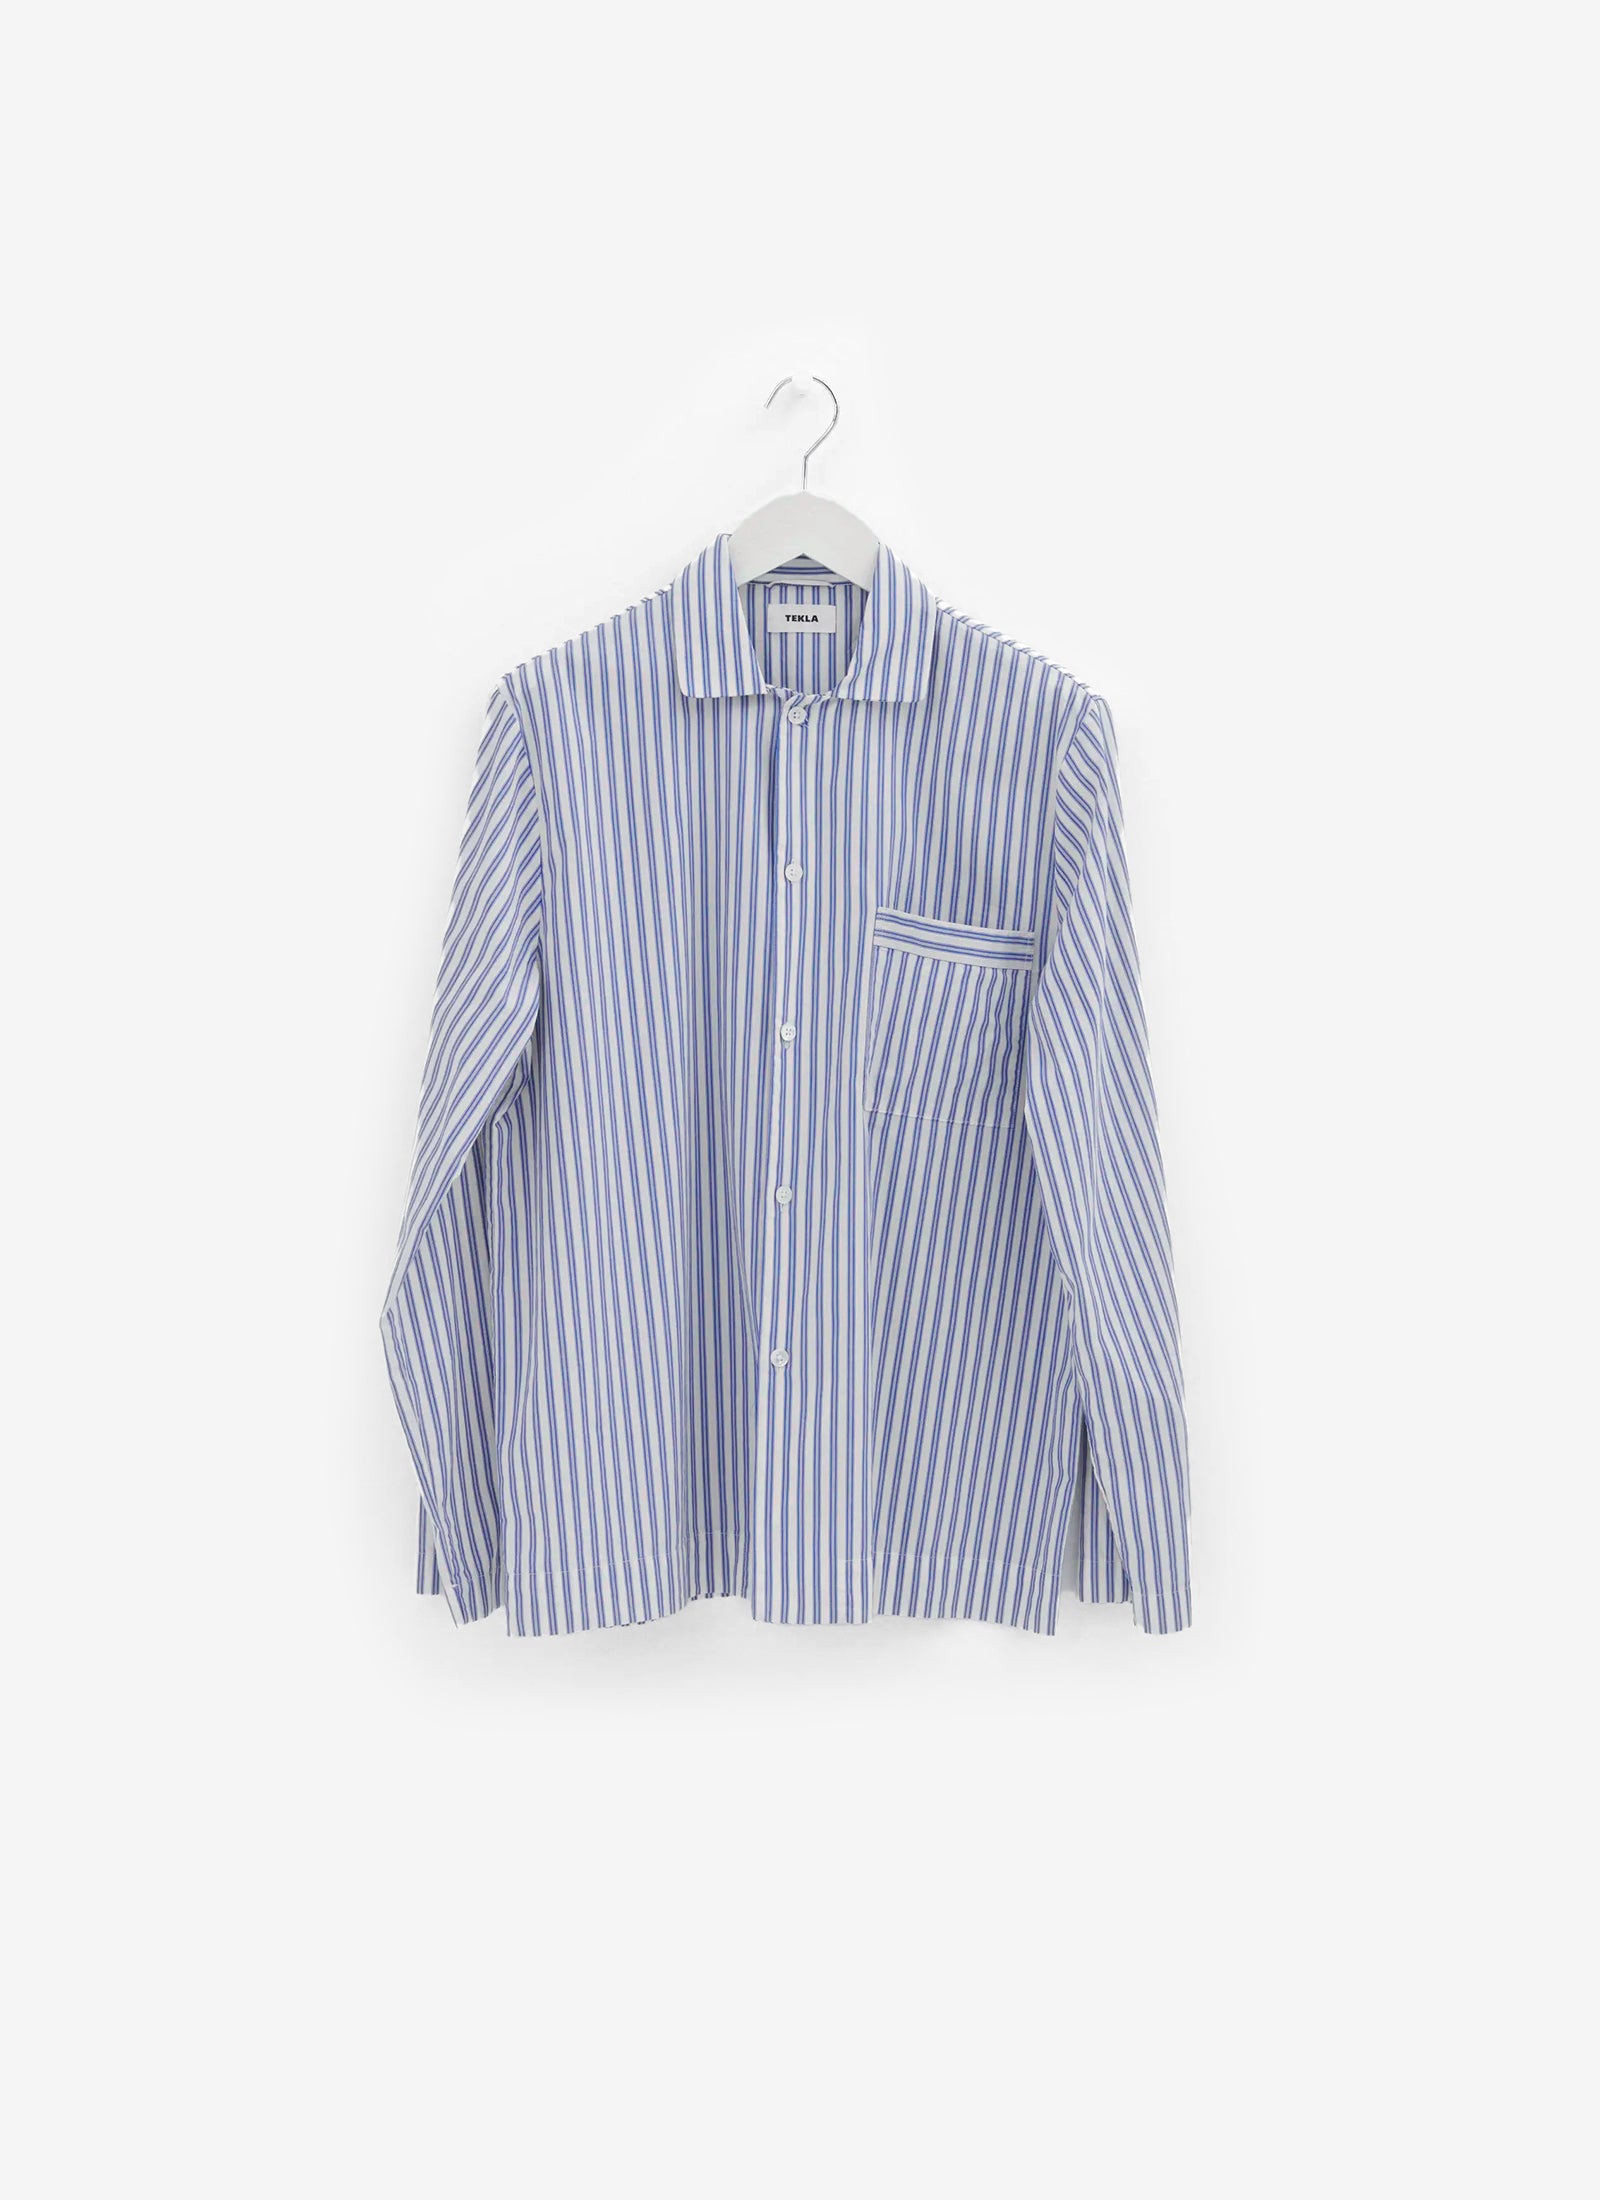 Poplin Sleep Shirt - Skagen Stripes